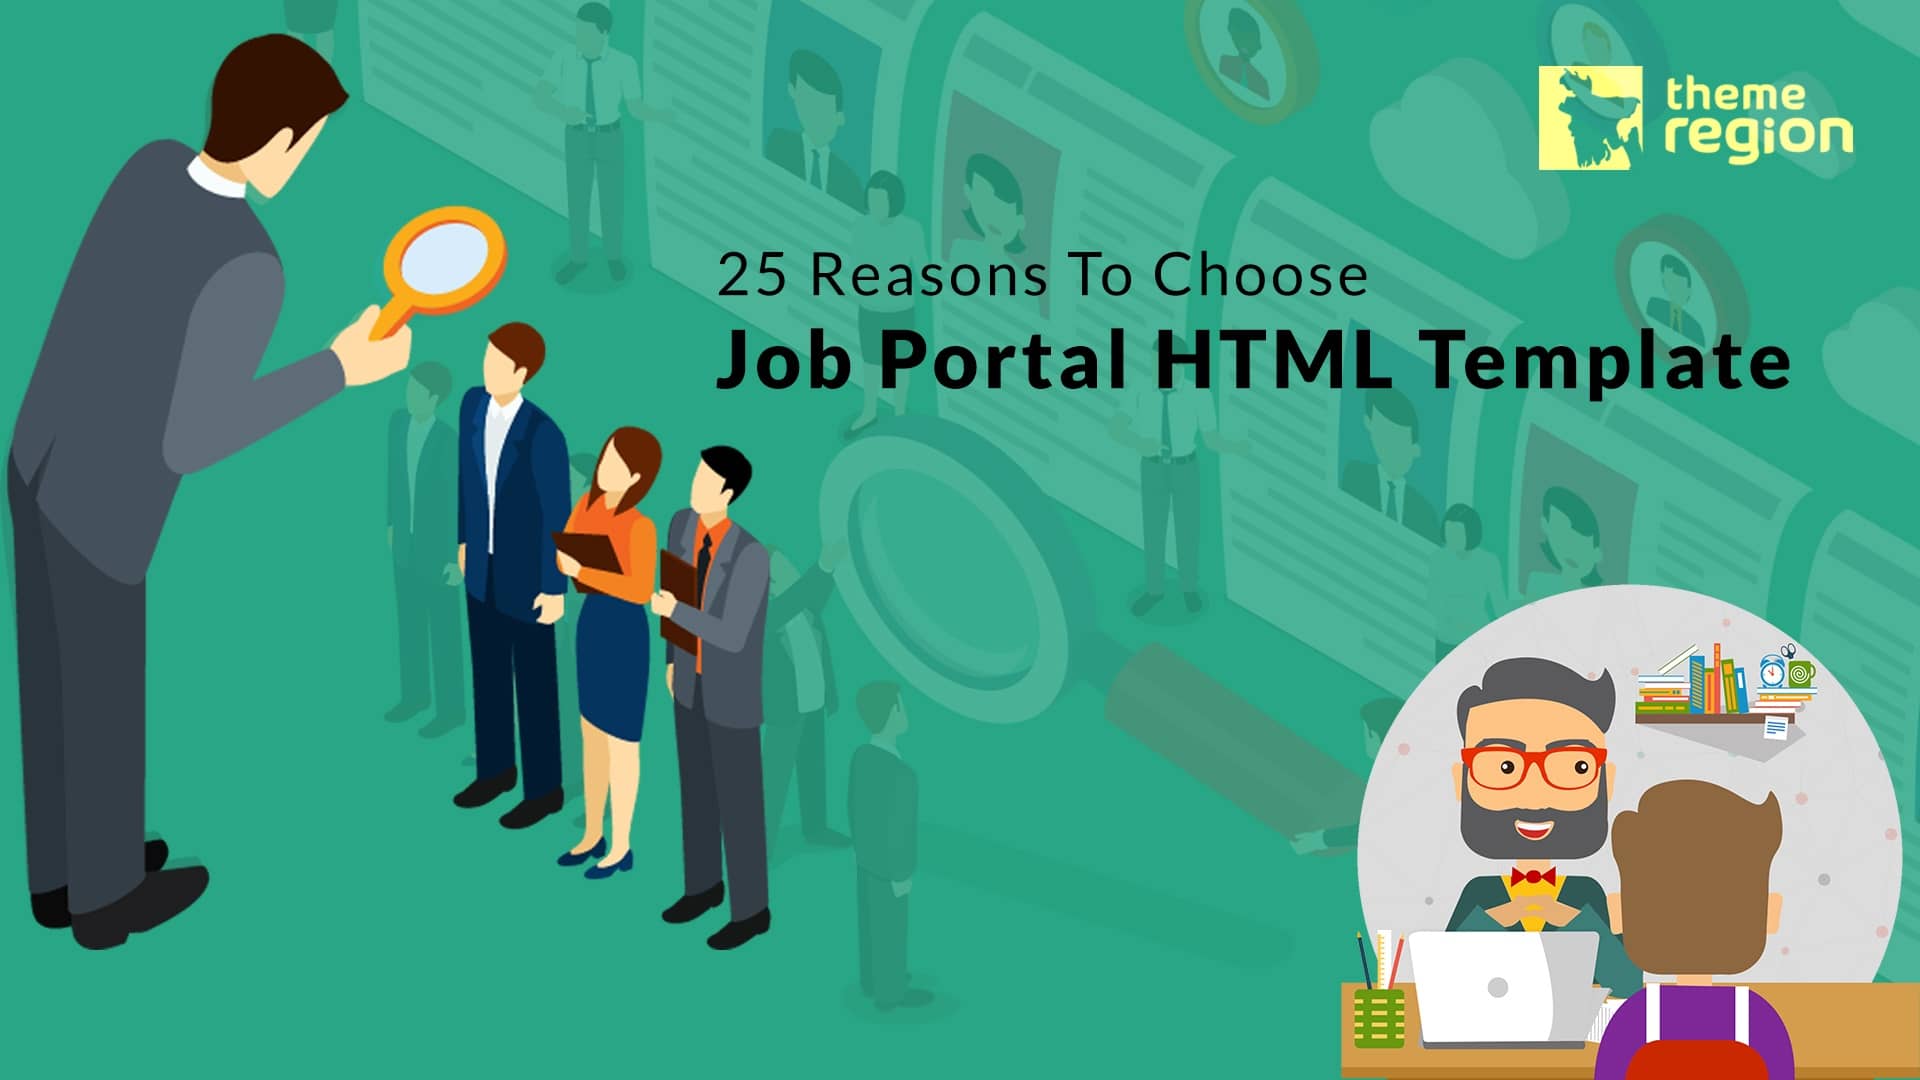 25 Reasons To Choose Job Portal HTML Template- Don’t Miss The Bonus Part